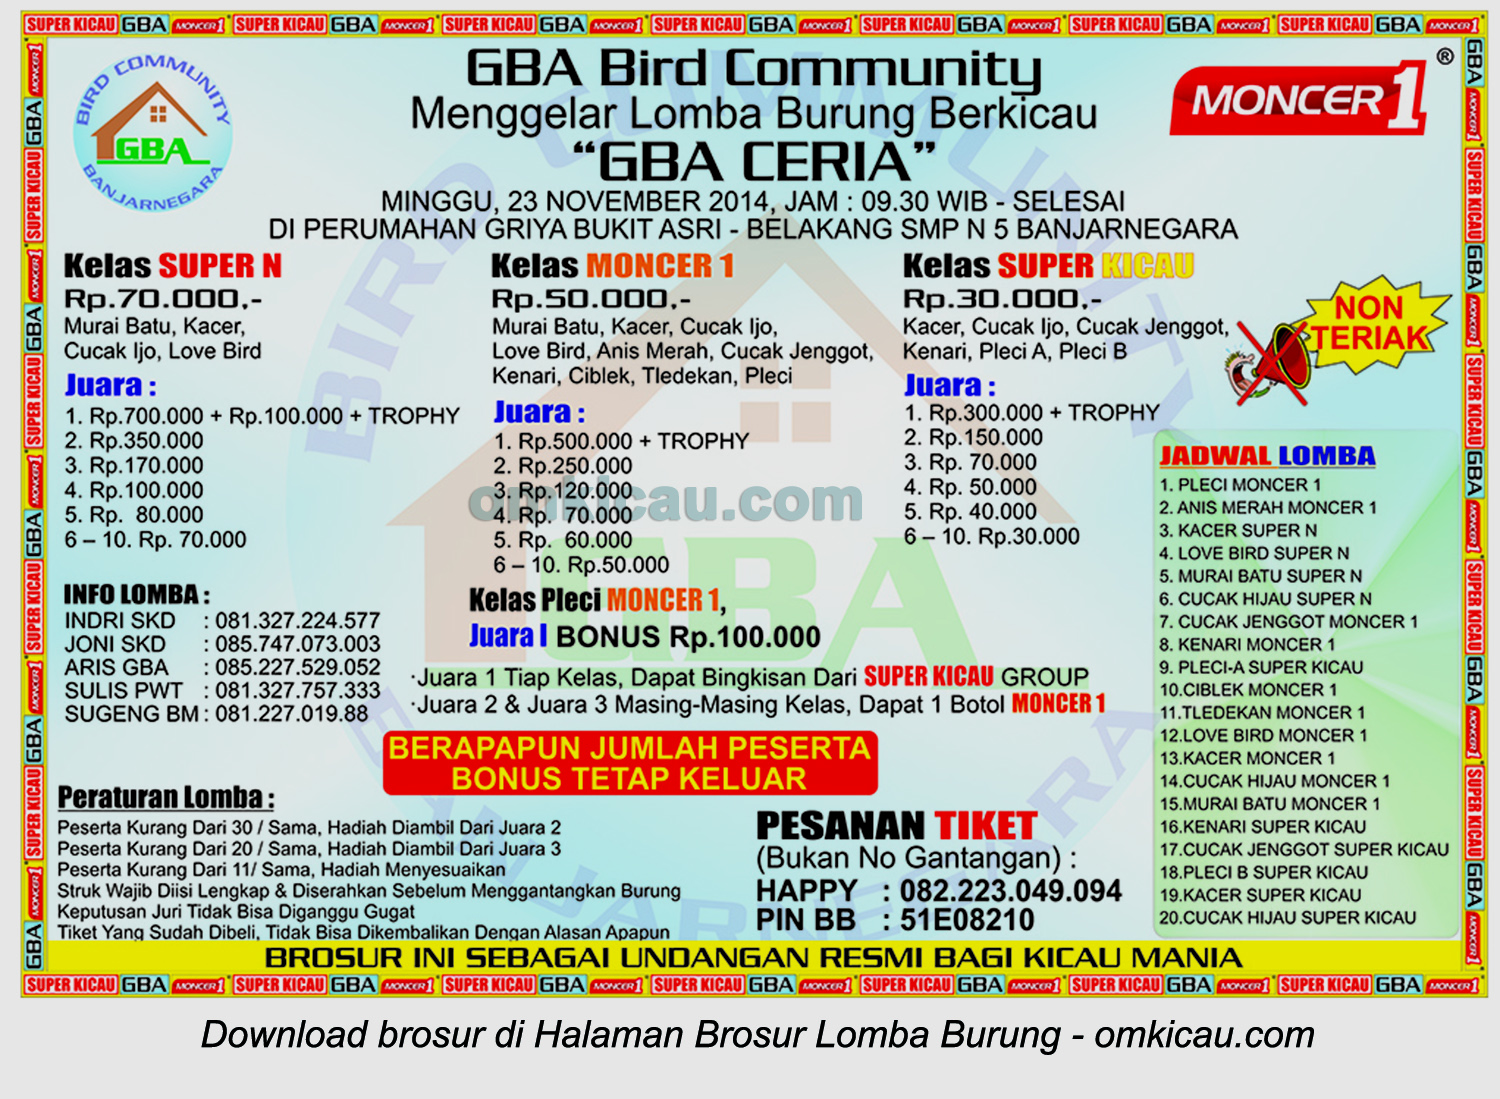 Brosur Lomba Burung Berkicau GBA Ceria, Banjarnegara, 23 November 2014